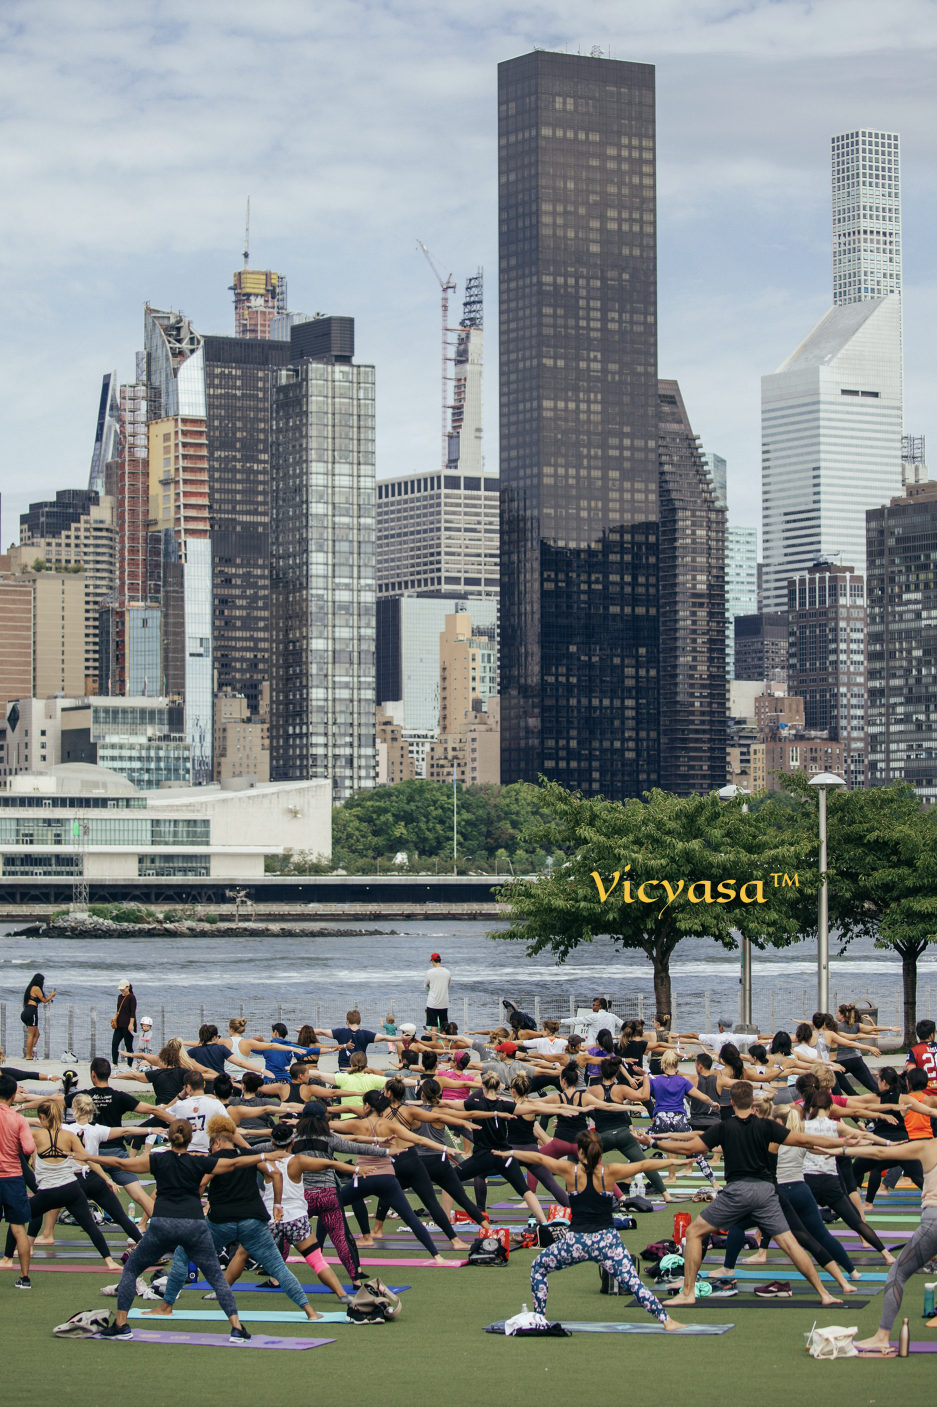 victor cotto Yoga NYC; Long Island City Yoga Classes; Astoria Queens yoga; Sui yoga NYC; New York Yoga HOT; Upper East Side best yoga; The Hampton's Yoga Summer; Hampton's Hot yoga Best; Celebrity yoga Teacher; Vicyasa 